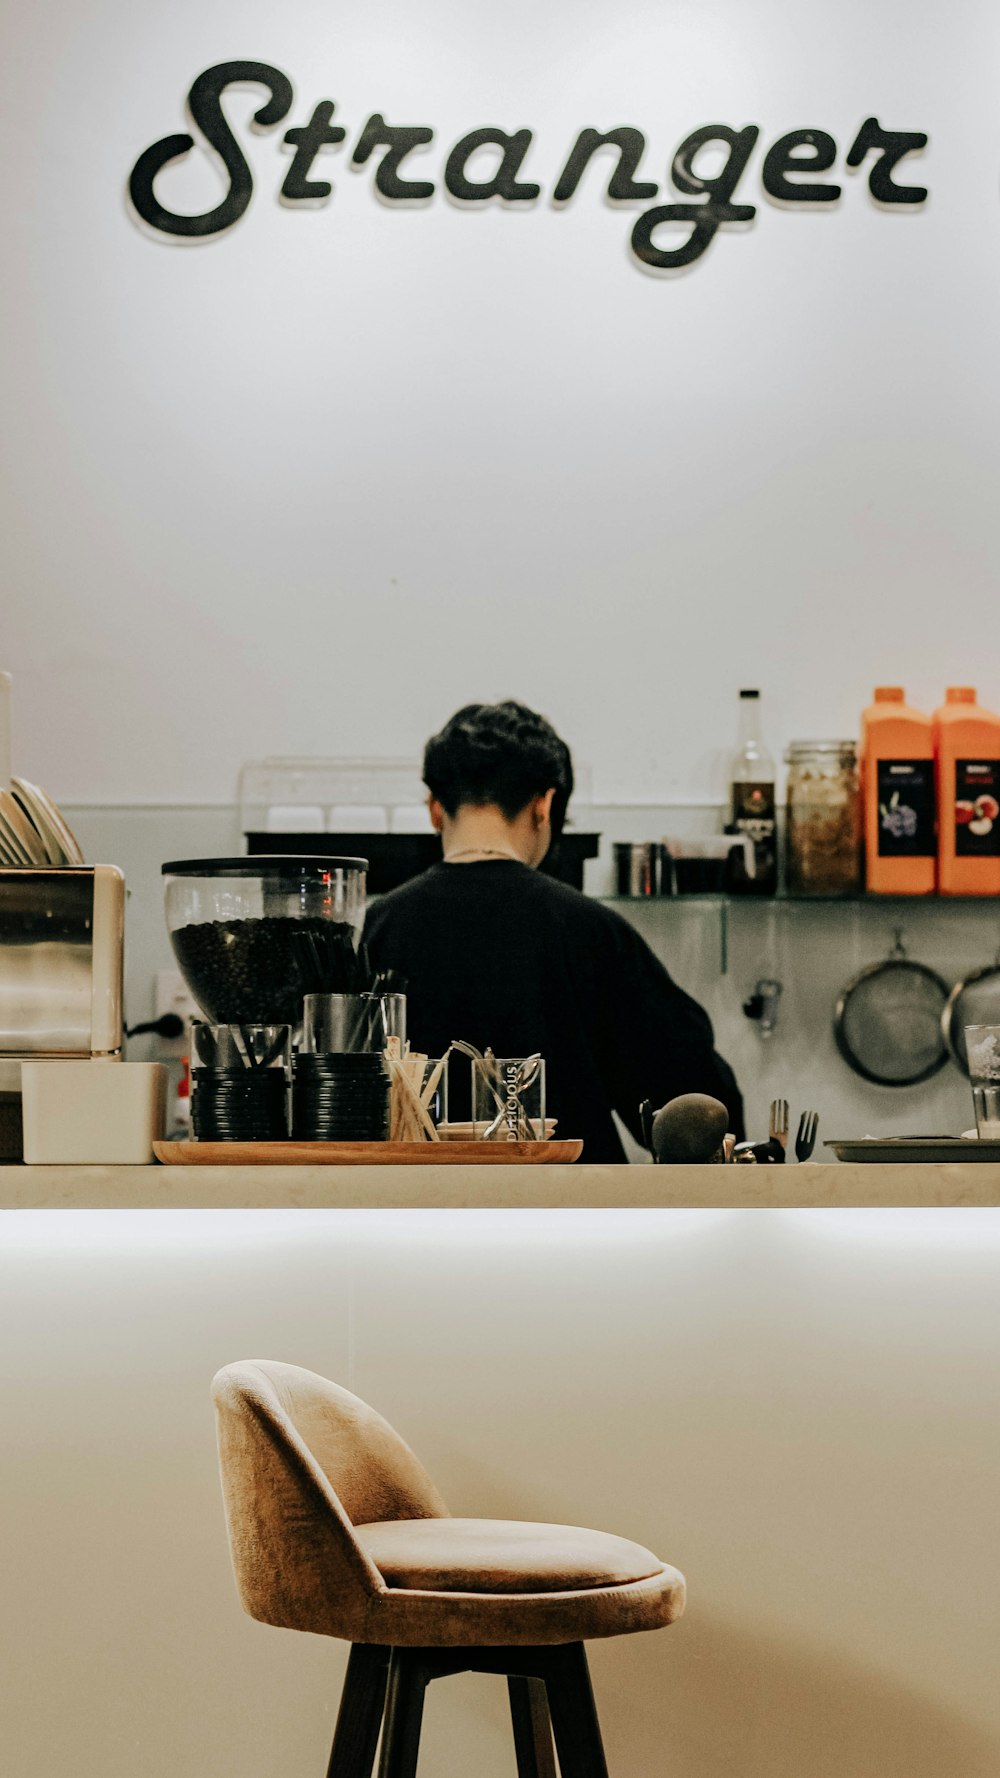 man in black sweater standing in kitchen